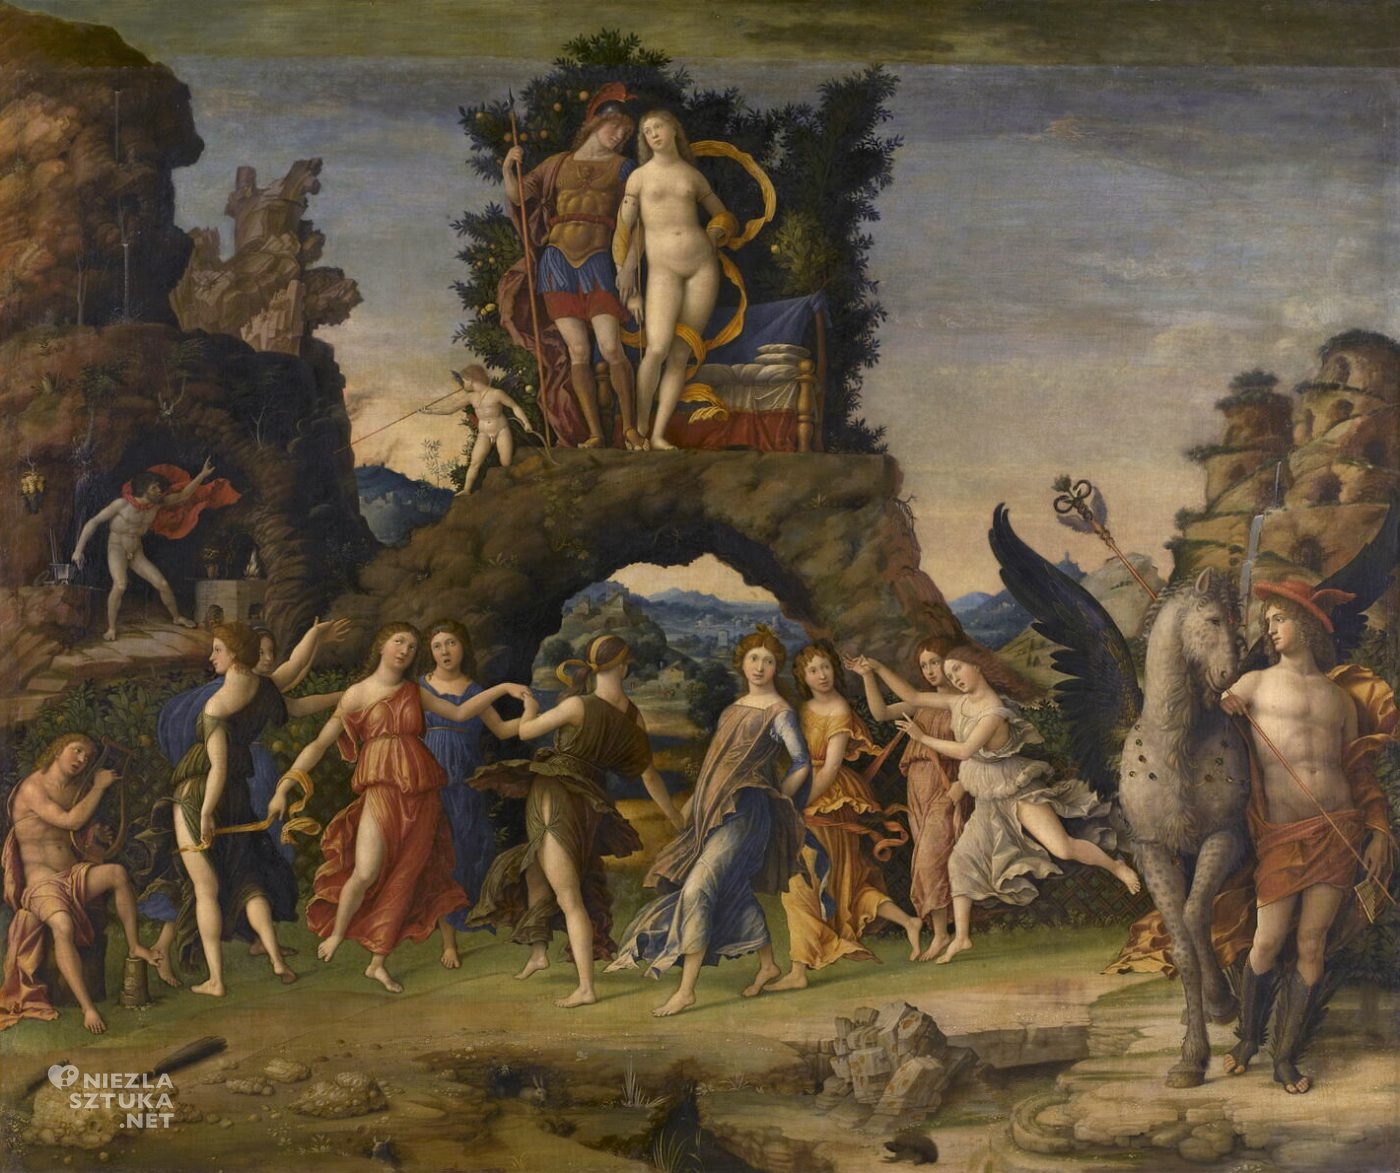 Andrea Mantegna, Mars i Wenus, Parnas, Niezła Sztuka